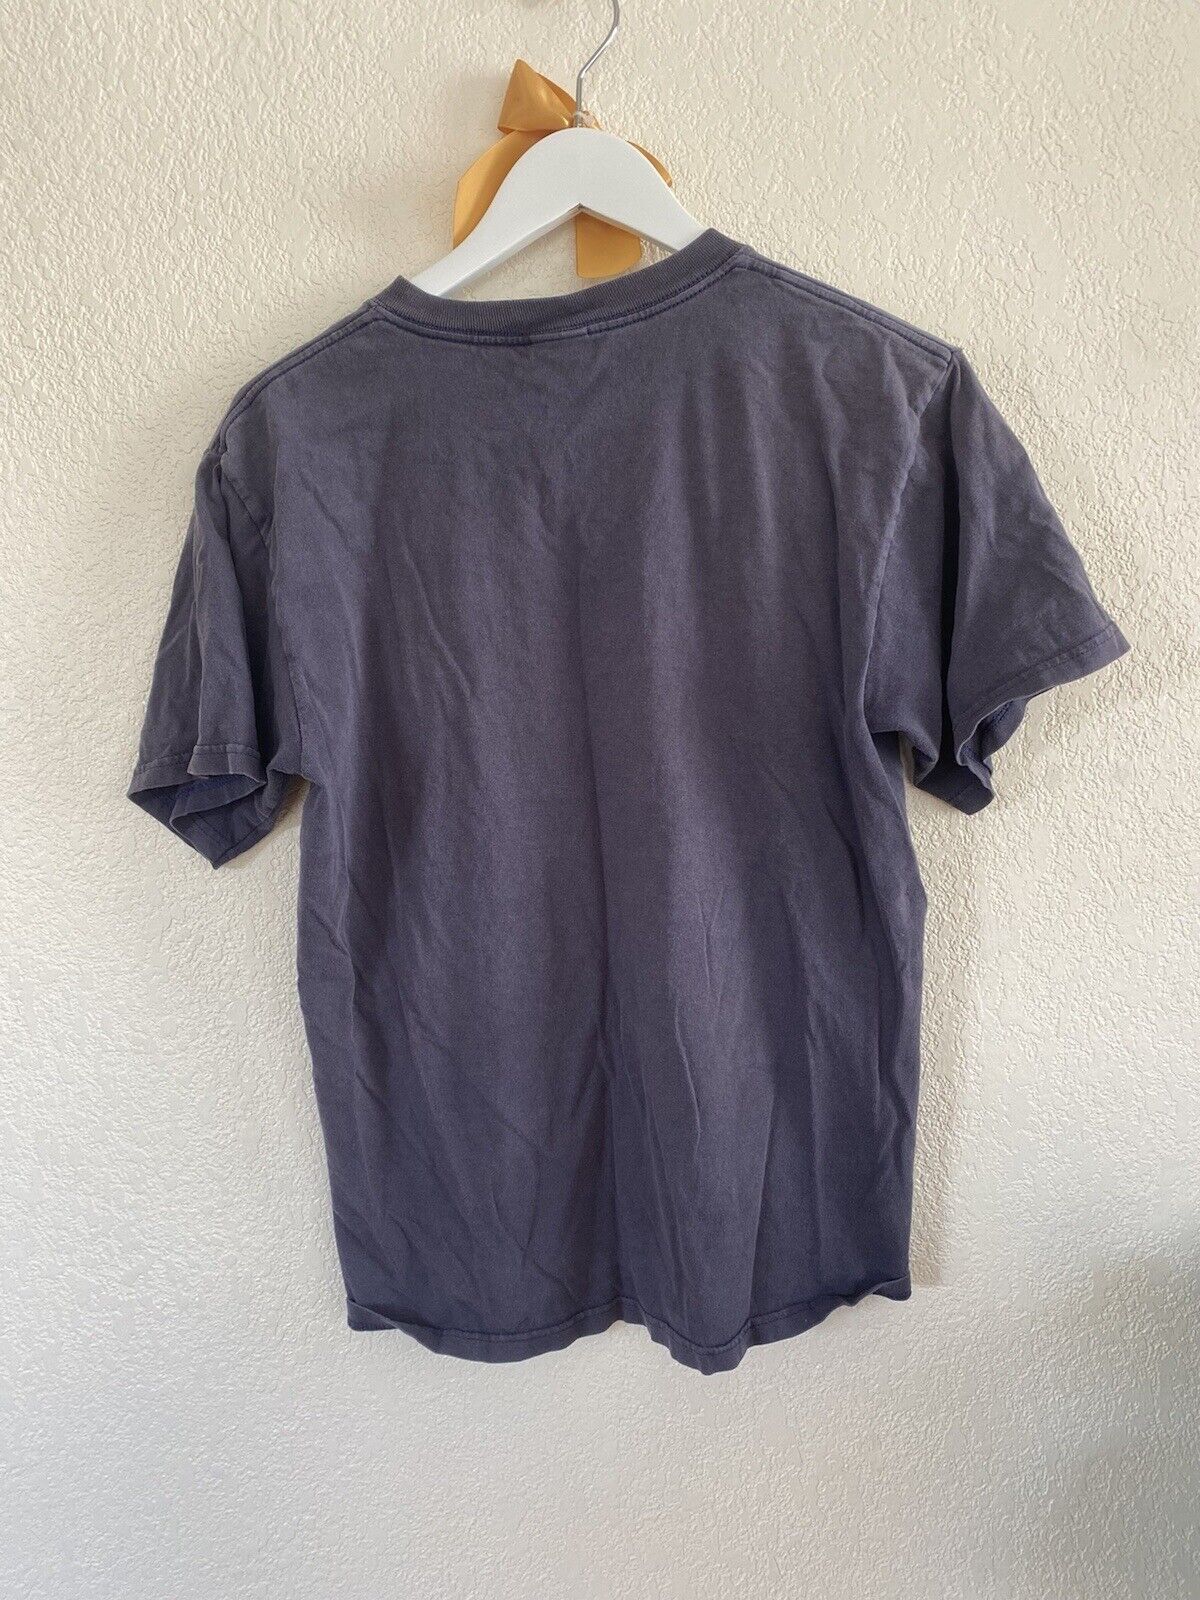 Vintage Wrigley Field Tshirt - Anvil - Adult Medium